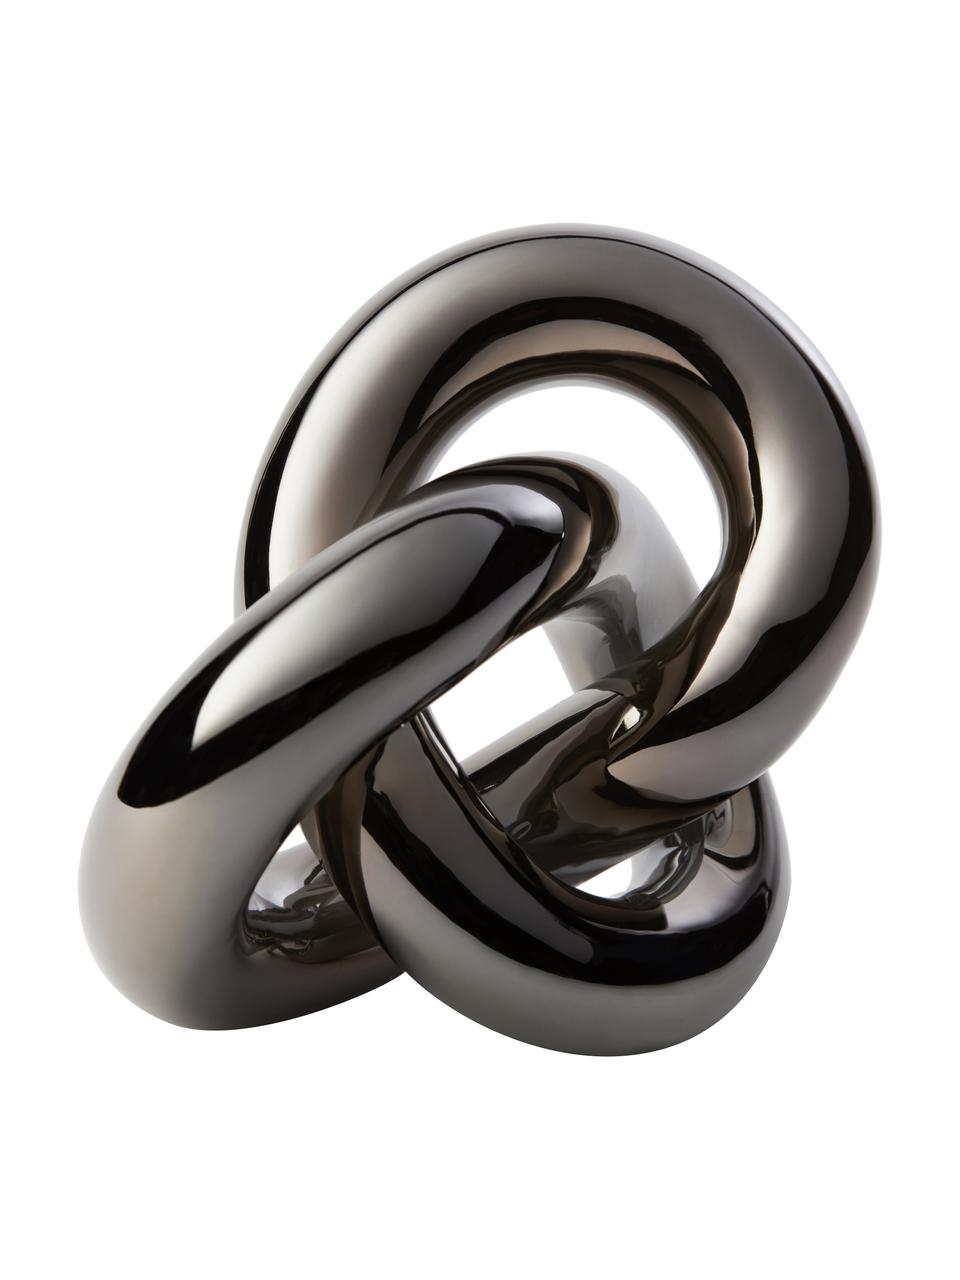 Deko-Objekt Knot aus Keramik in Silberfarben, Keramik, Nickelschwarz, glänzend, B 19 x H 9 cm